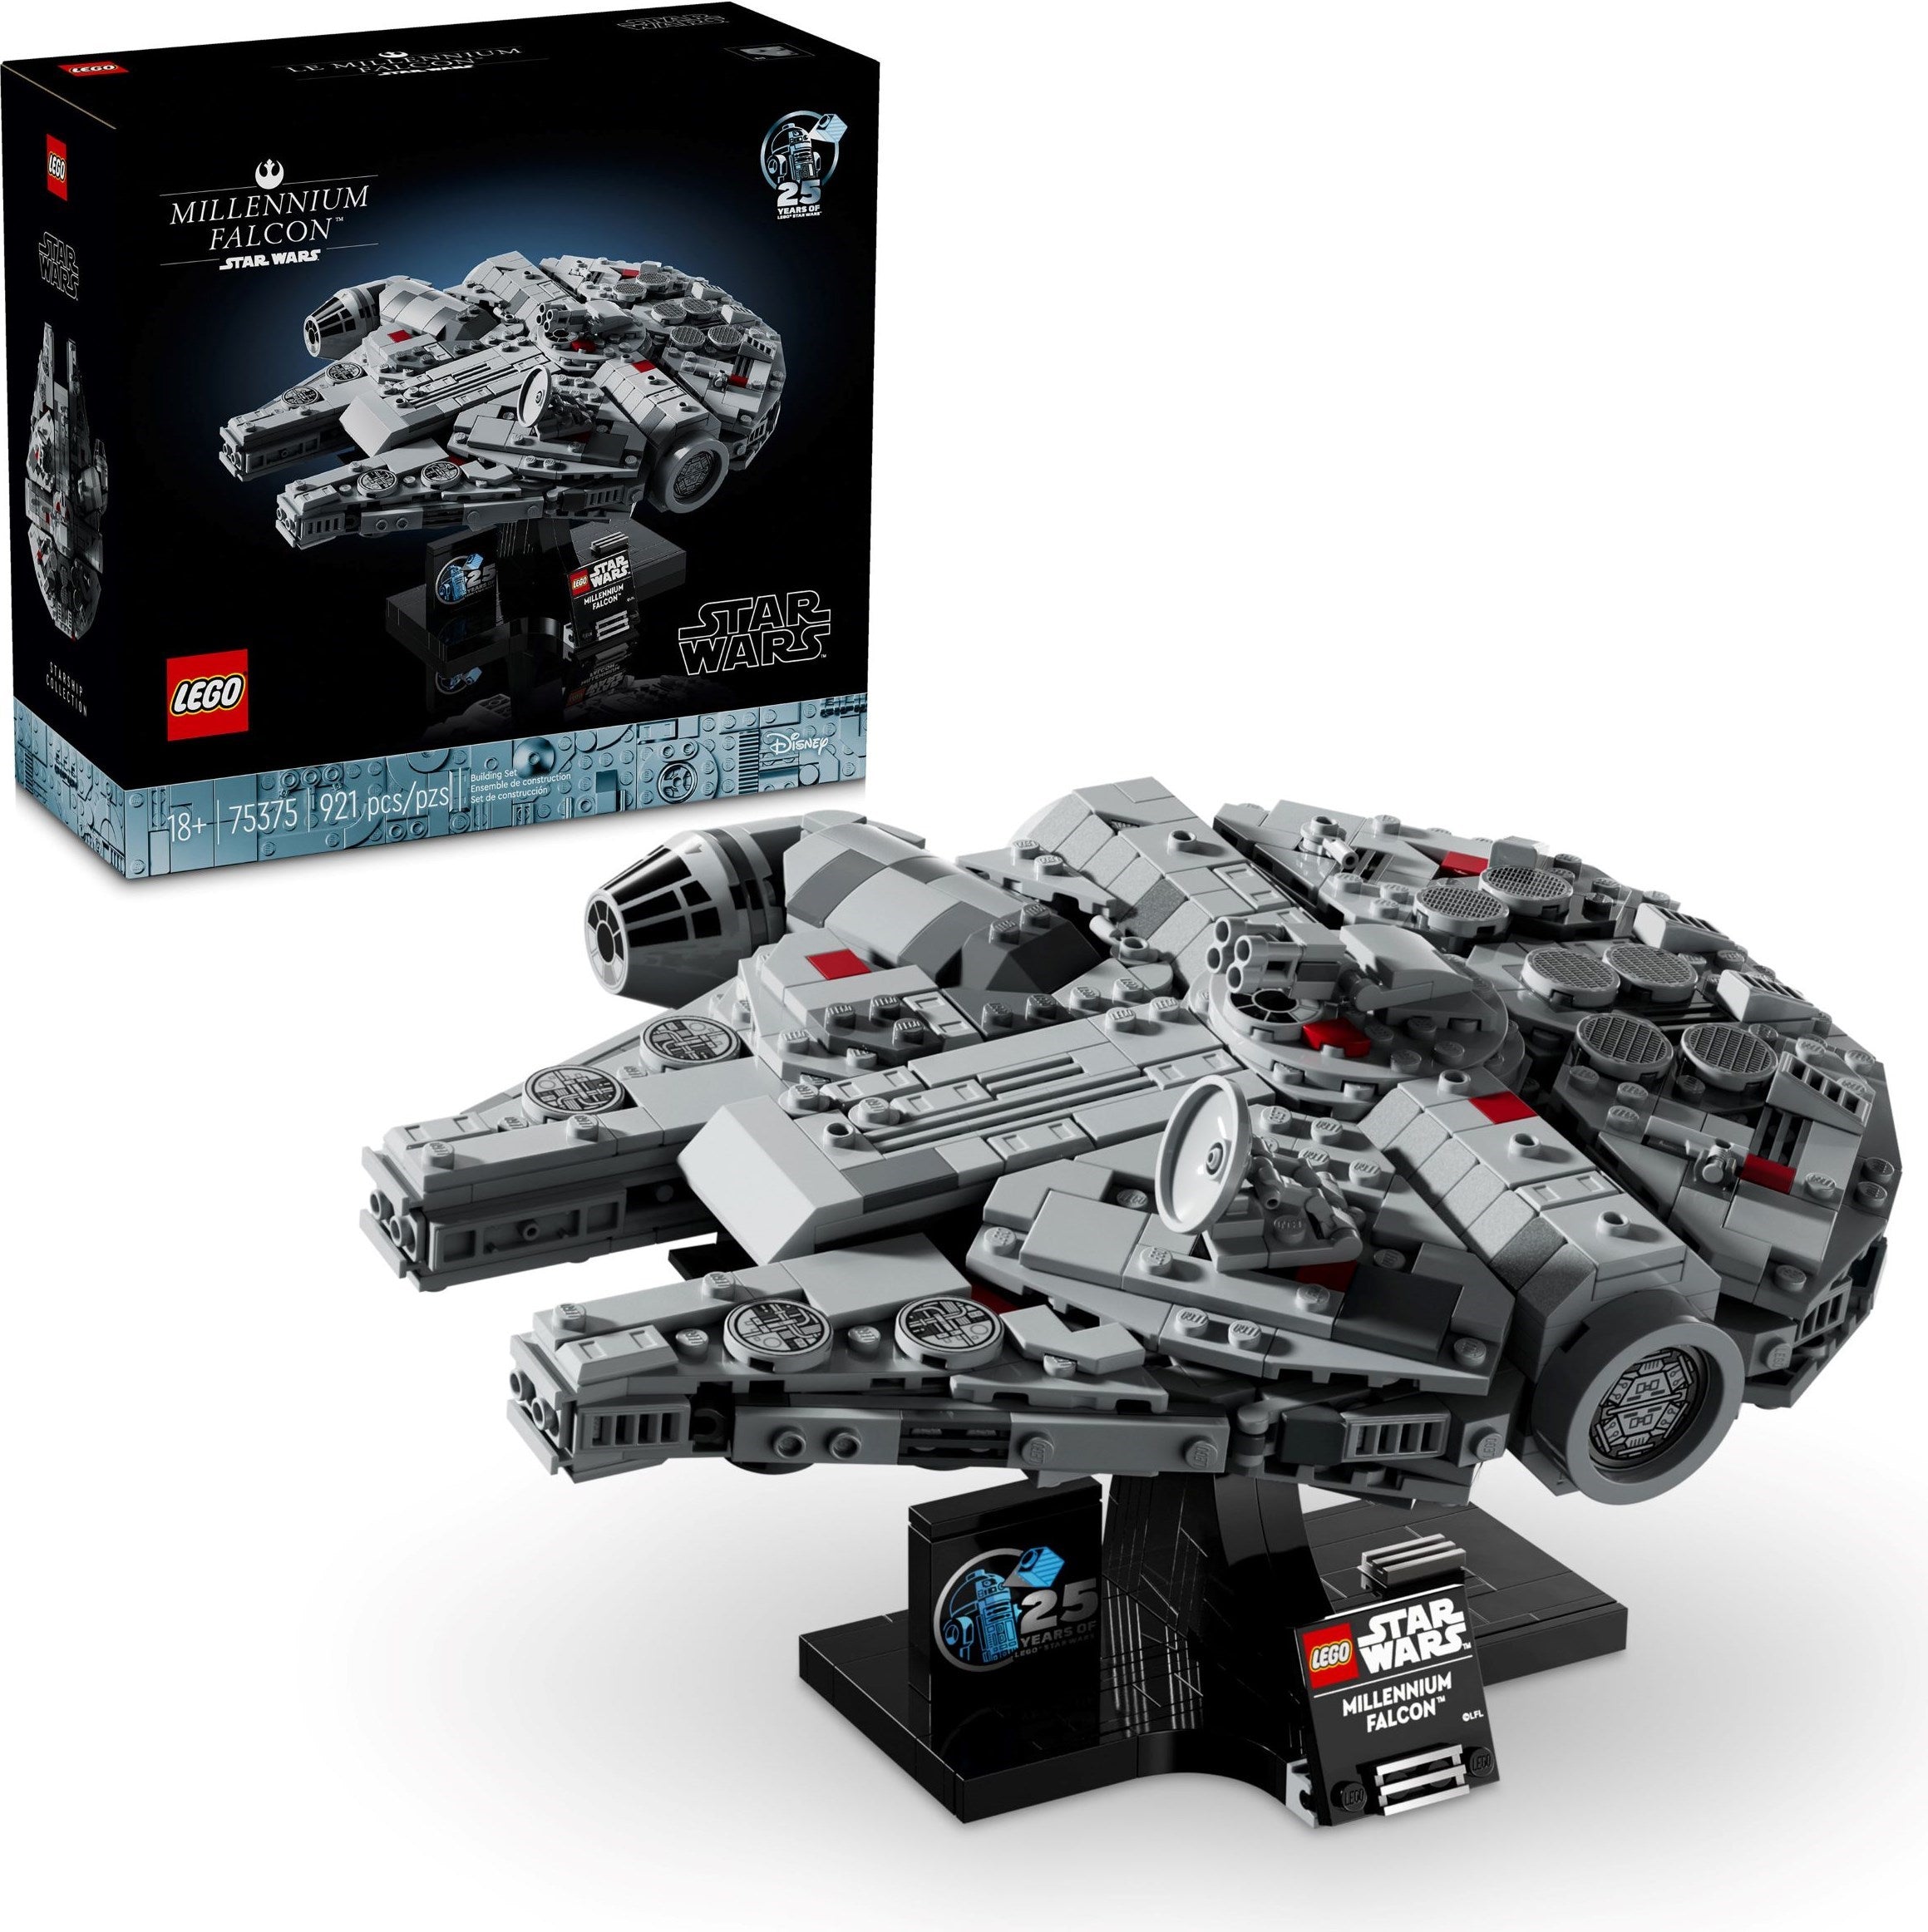 LEGO 75375 Millennium Falcon